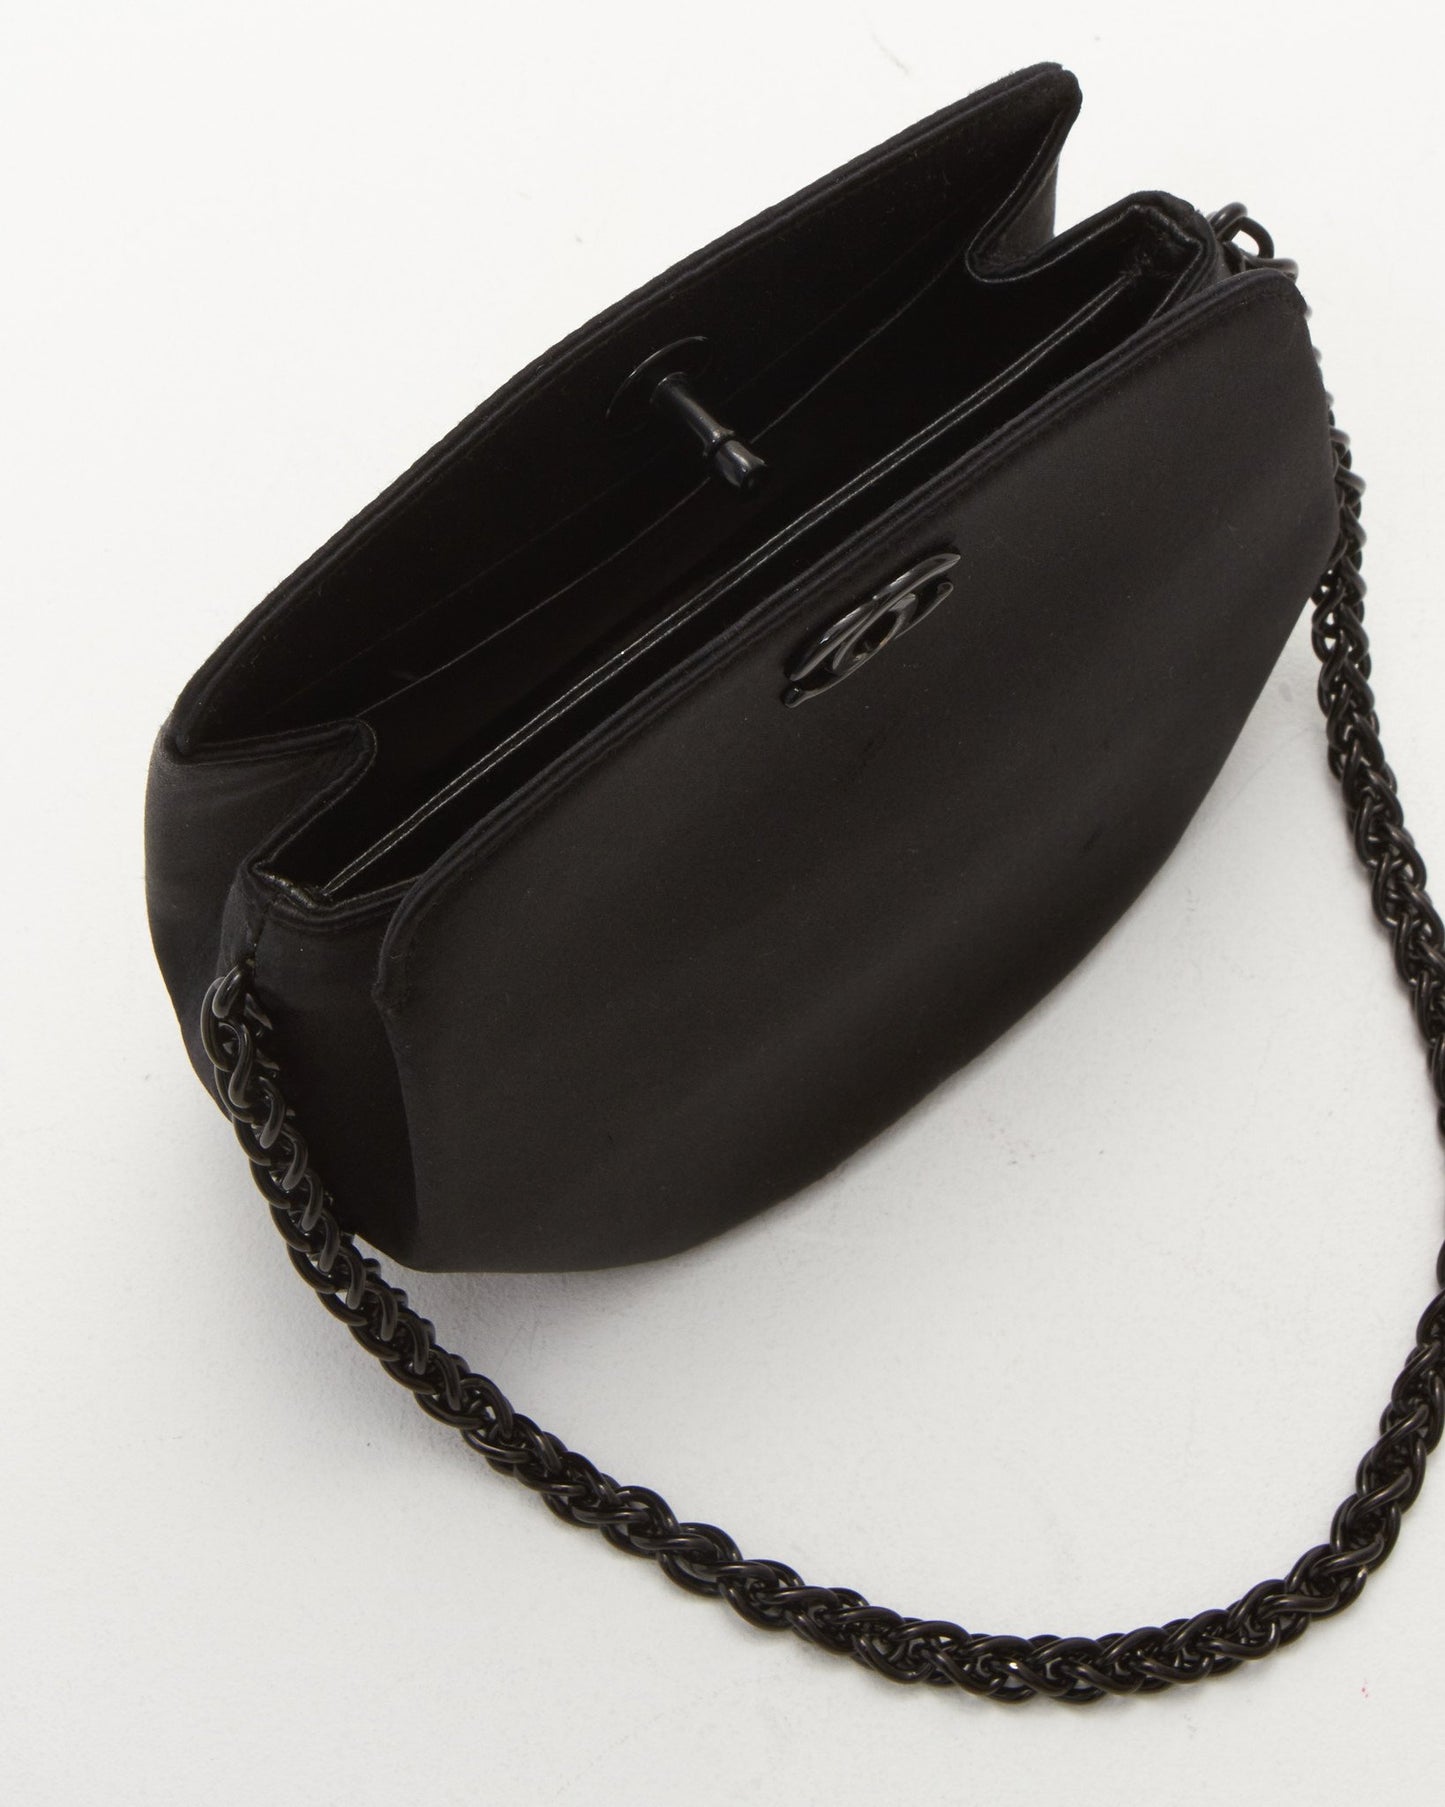 Chanel Vintage All Black Satin Evening Chain Clutch